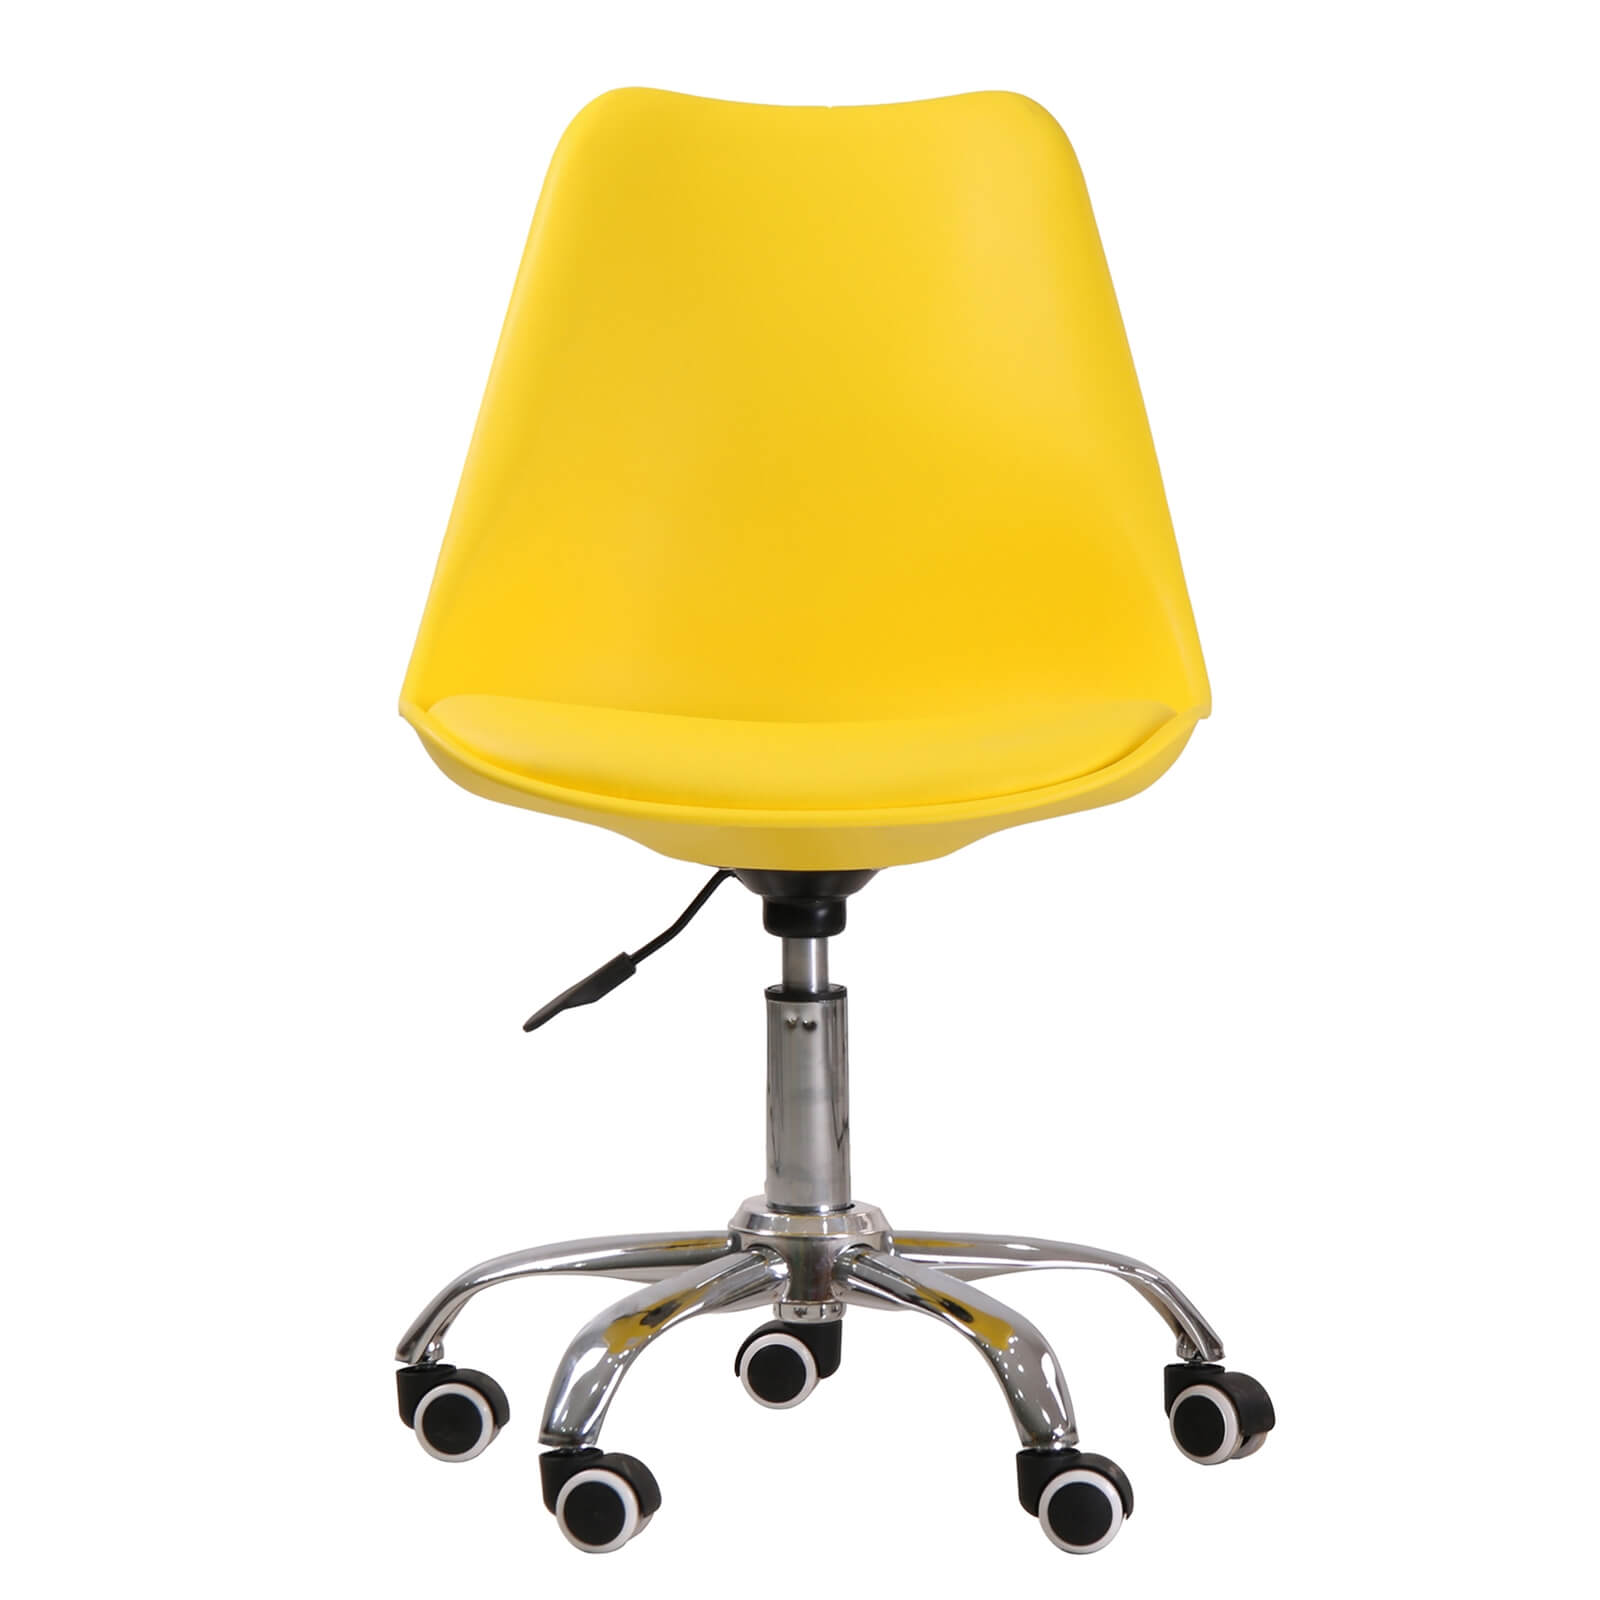 Orsen Swivel Office Chair - Yellow